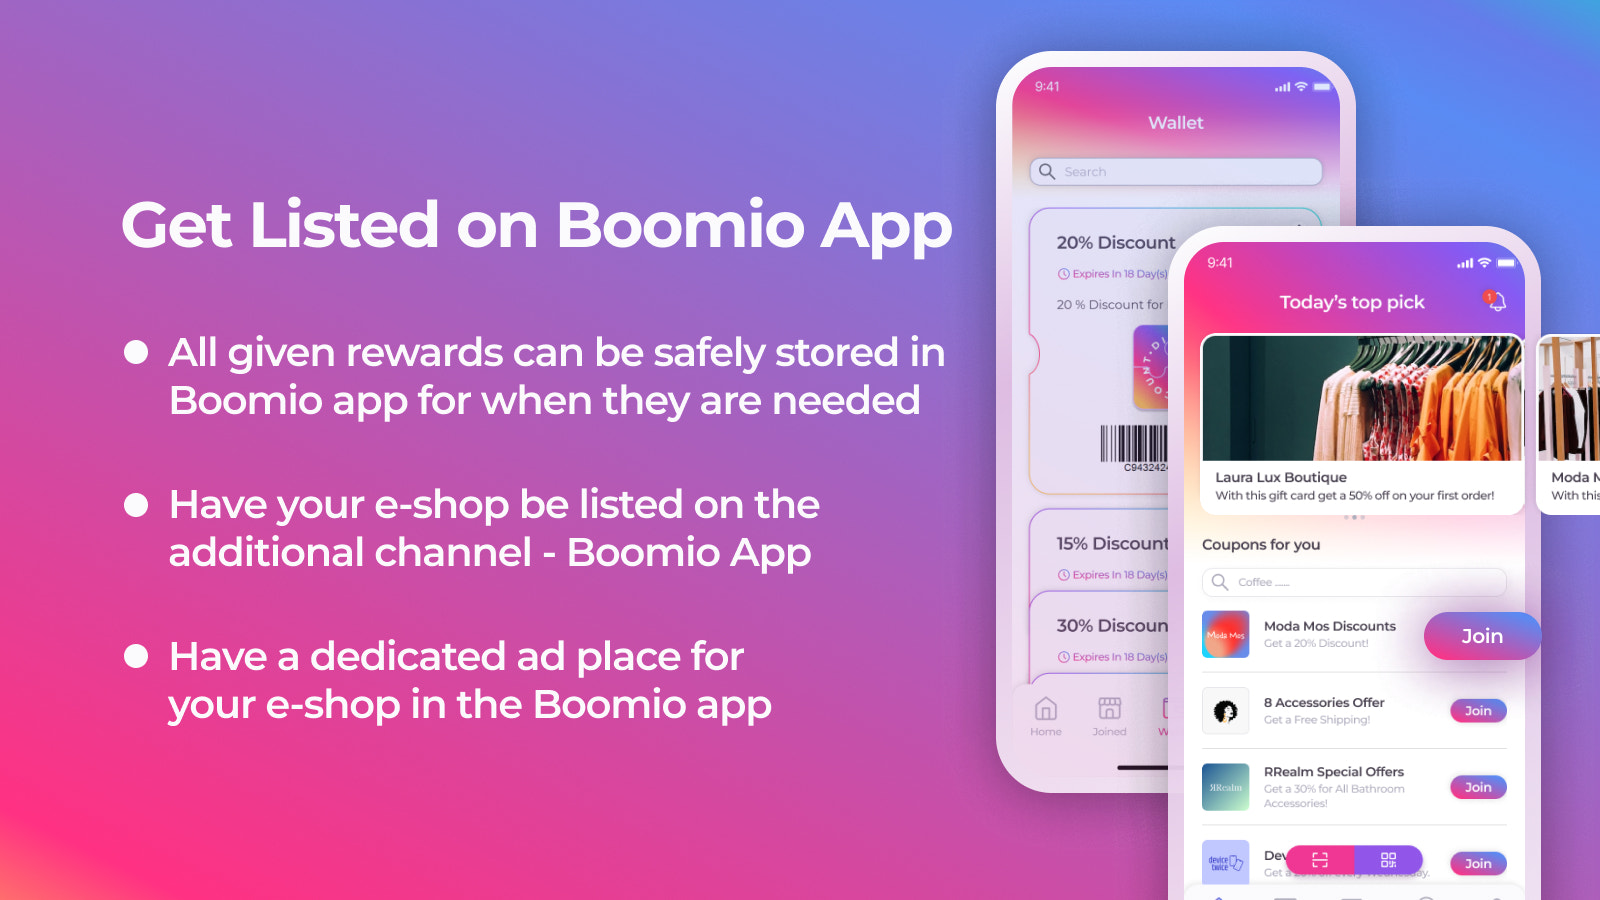 Tenha sua loja virtual listada no aplicativo Boomio.